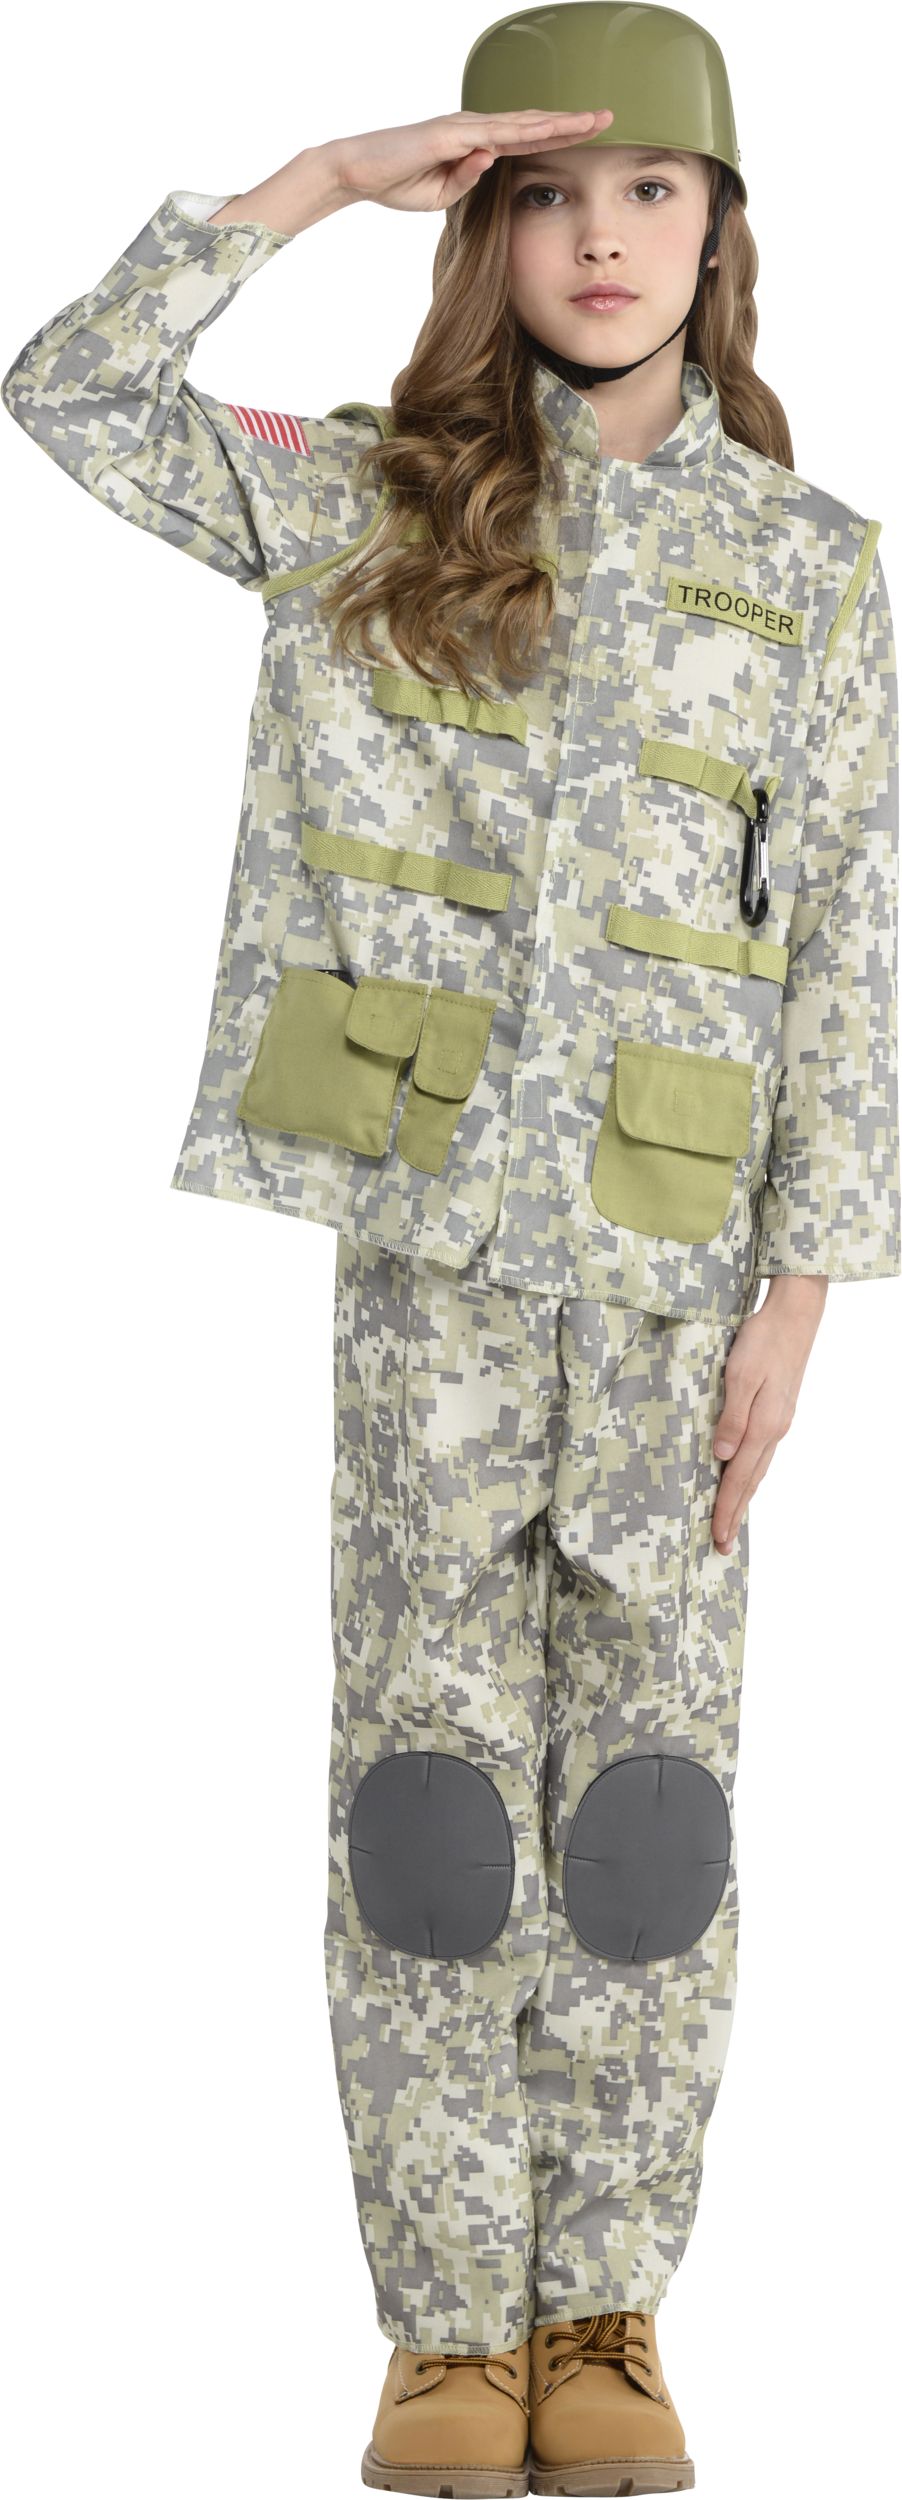 HOTpolice army soldier costume for kids boy girls school Halloween